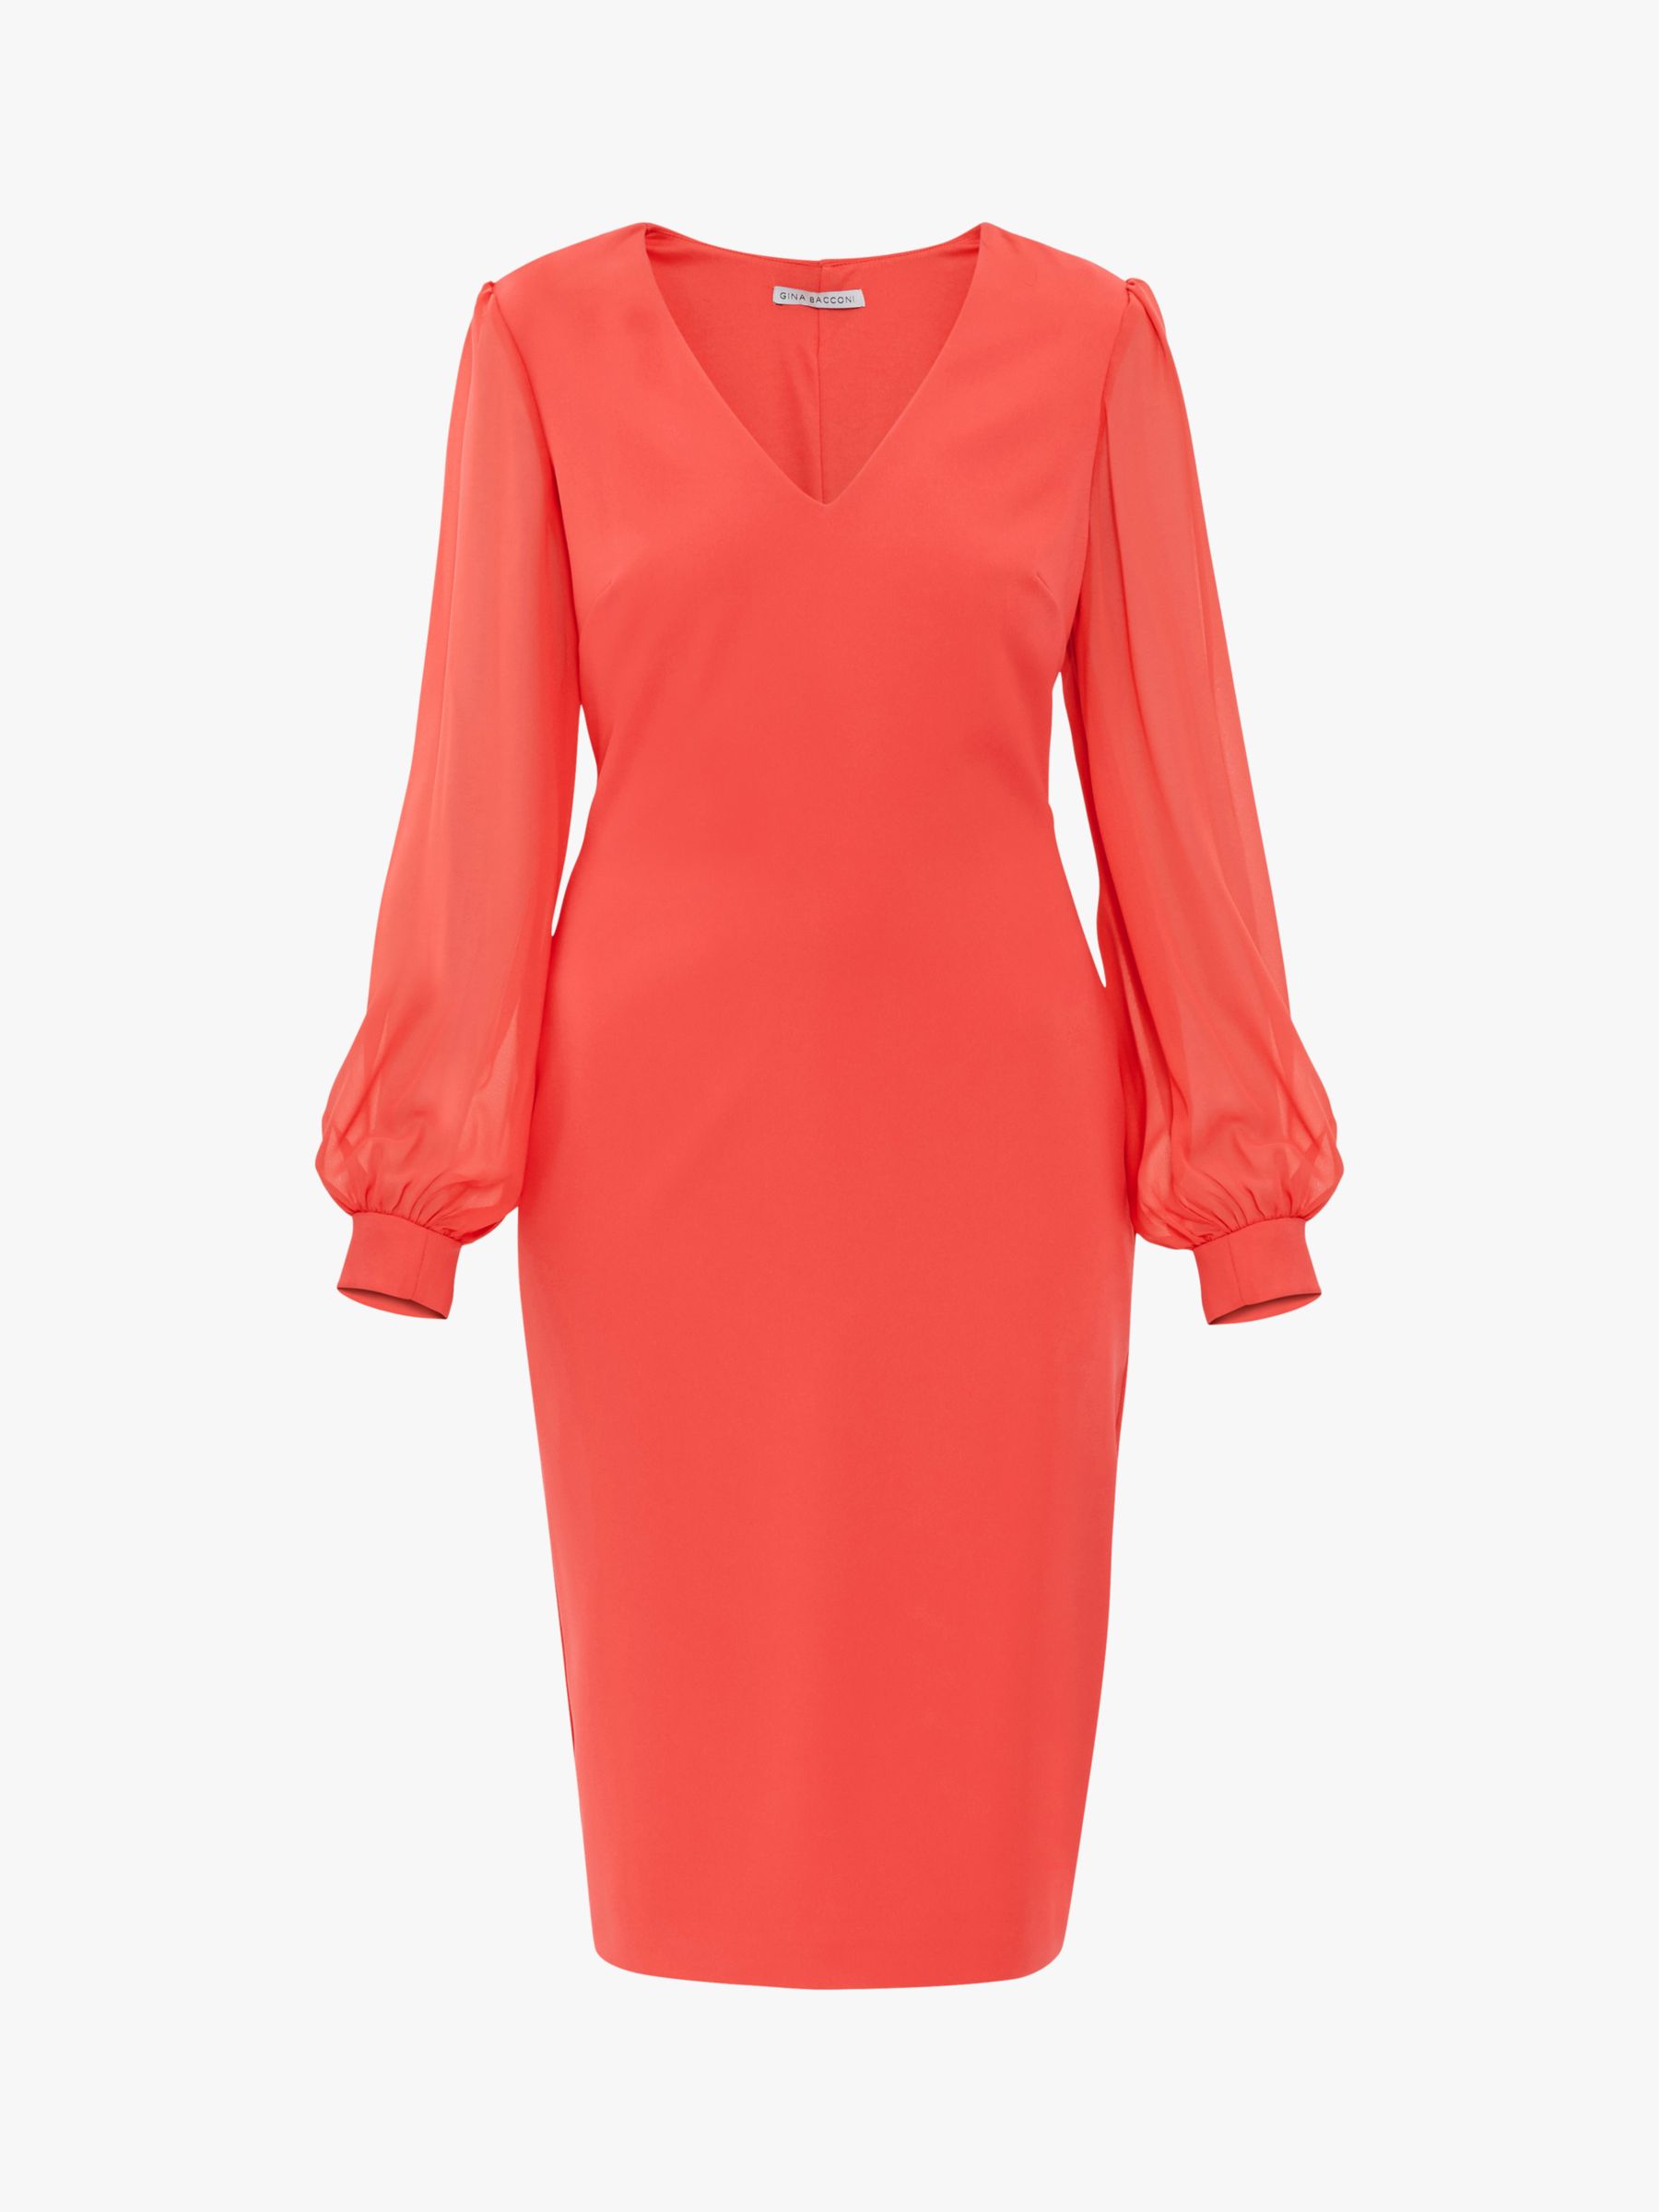 Gina Bacconi Lenuta Crepe Dress, Orange/Red at John Lewis & Partners